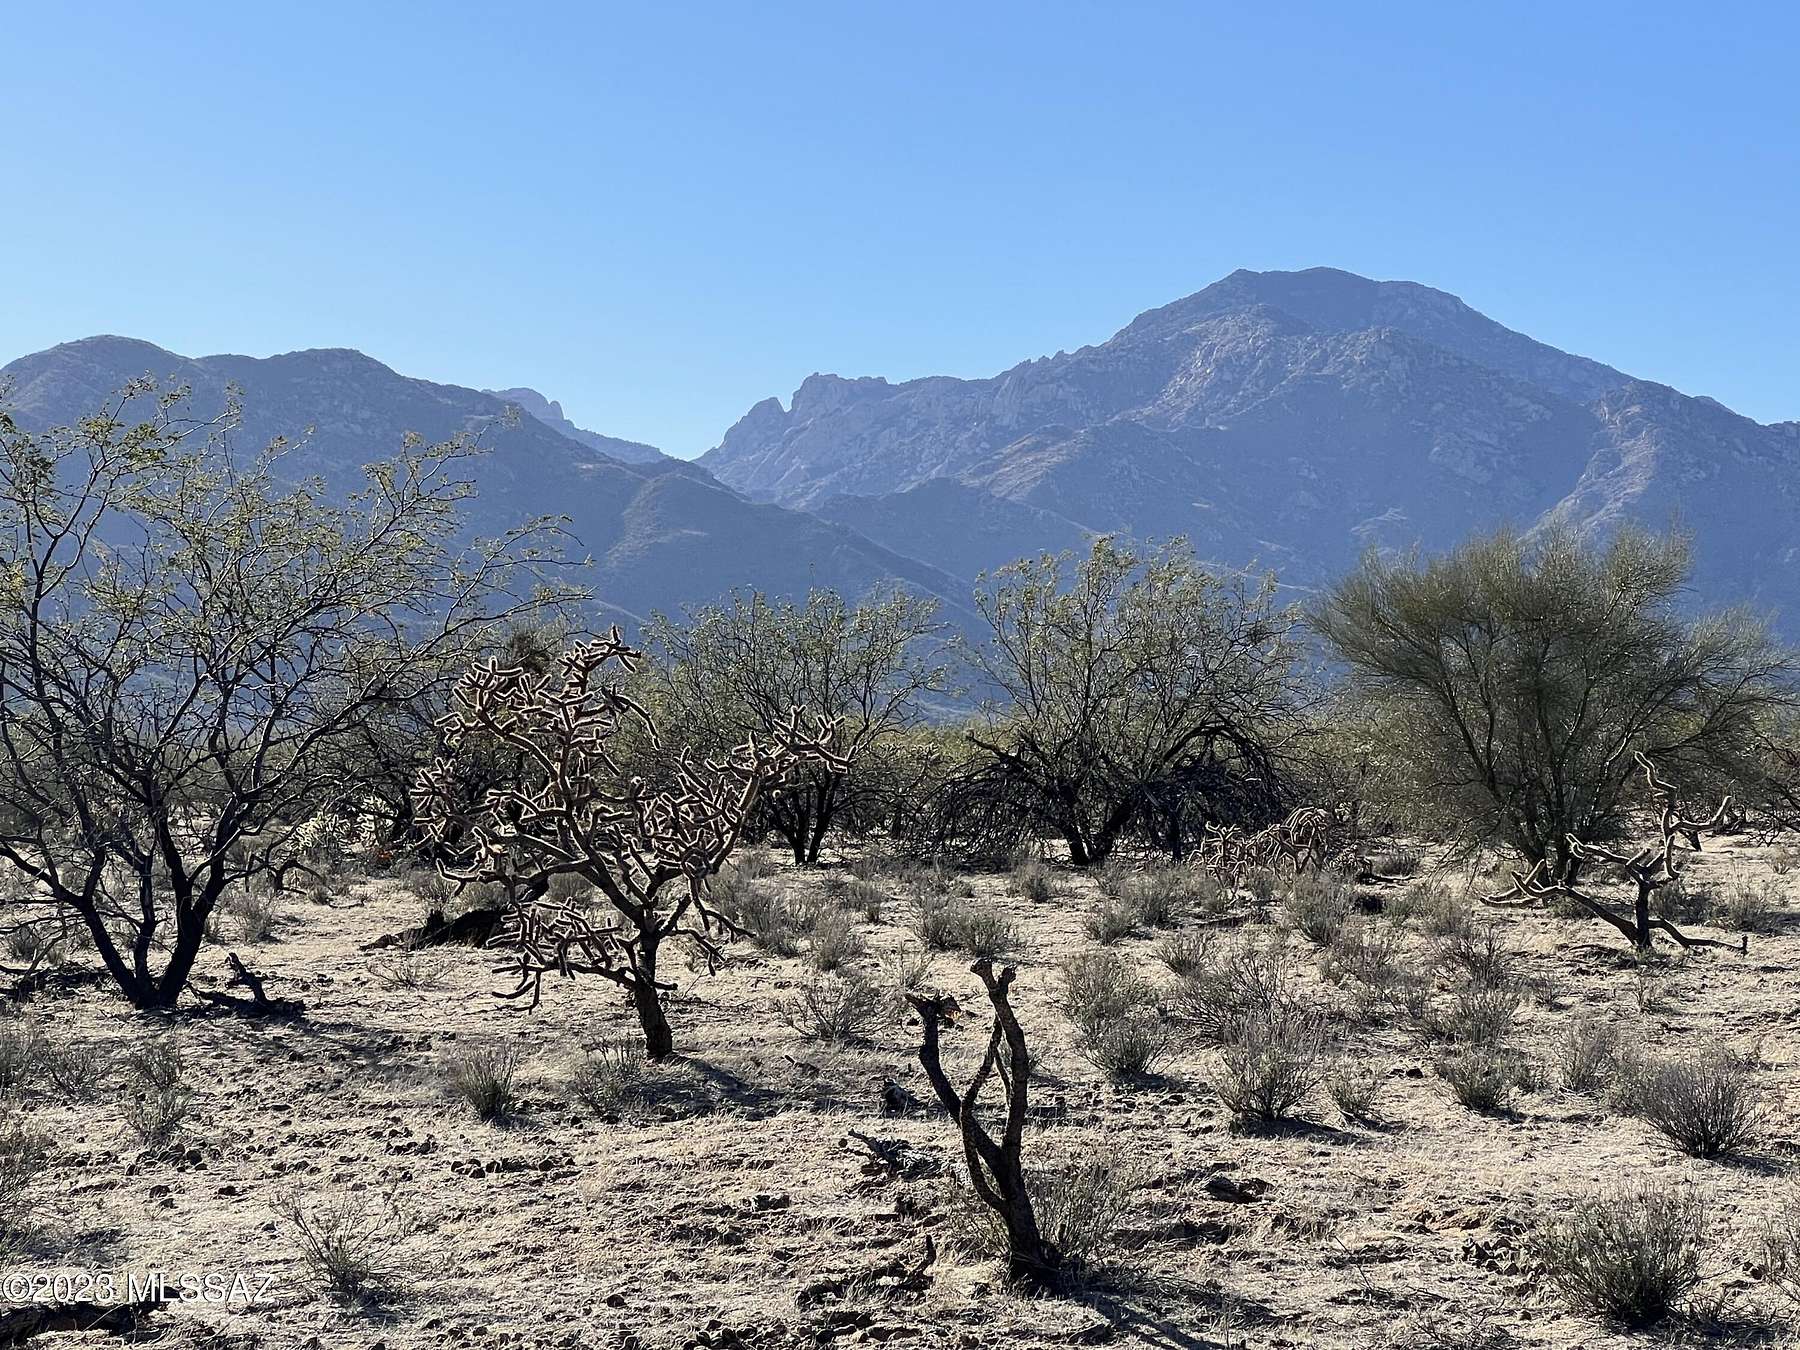 10 Acres of Land for Sale in Tucson, Arizona